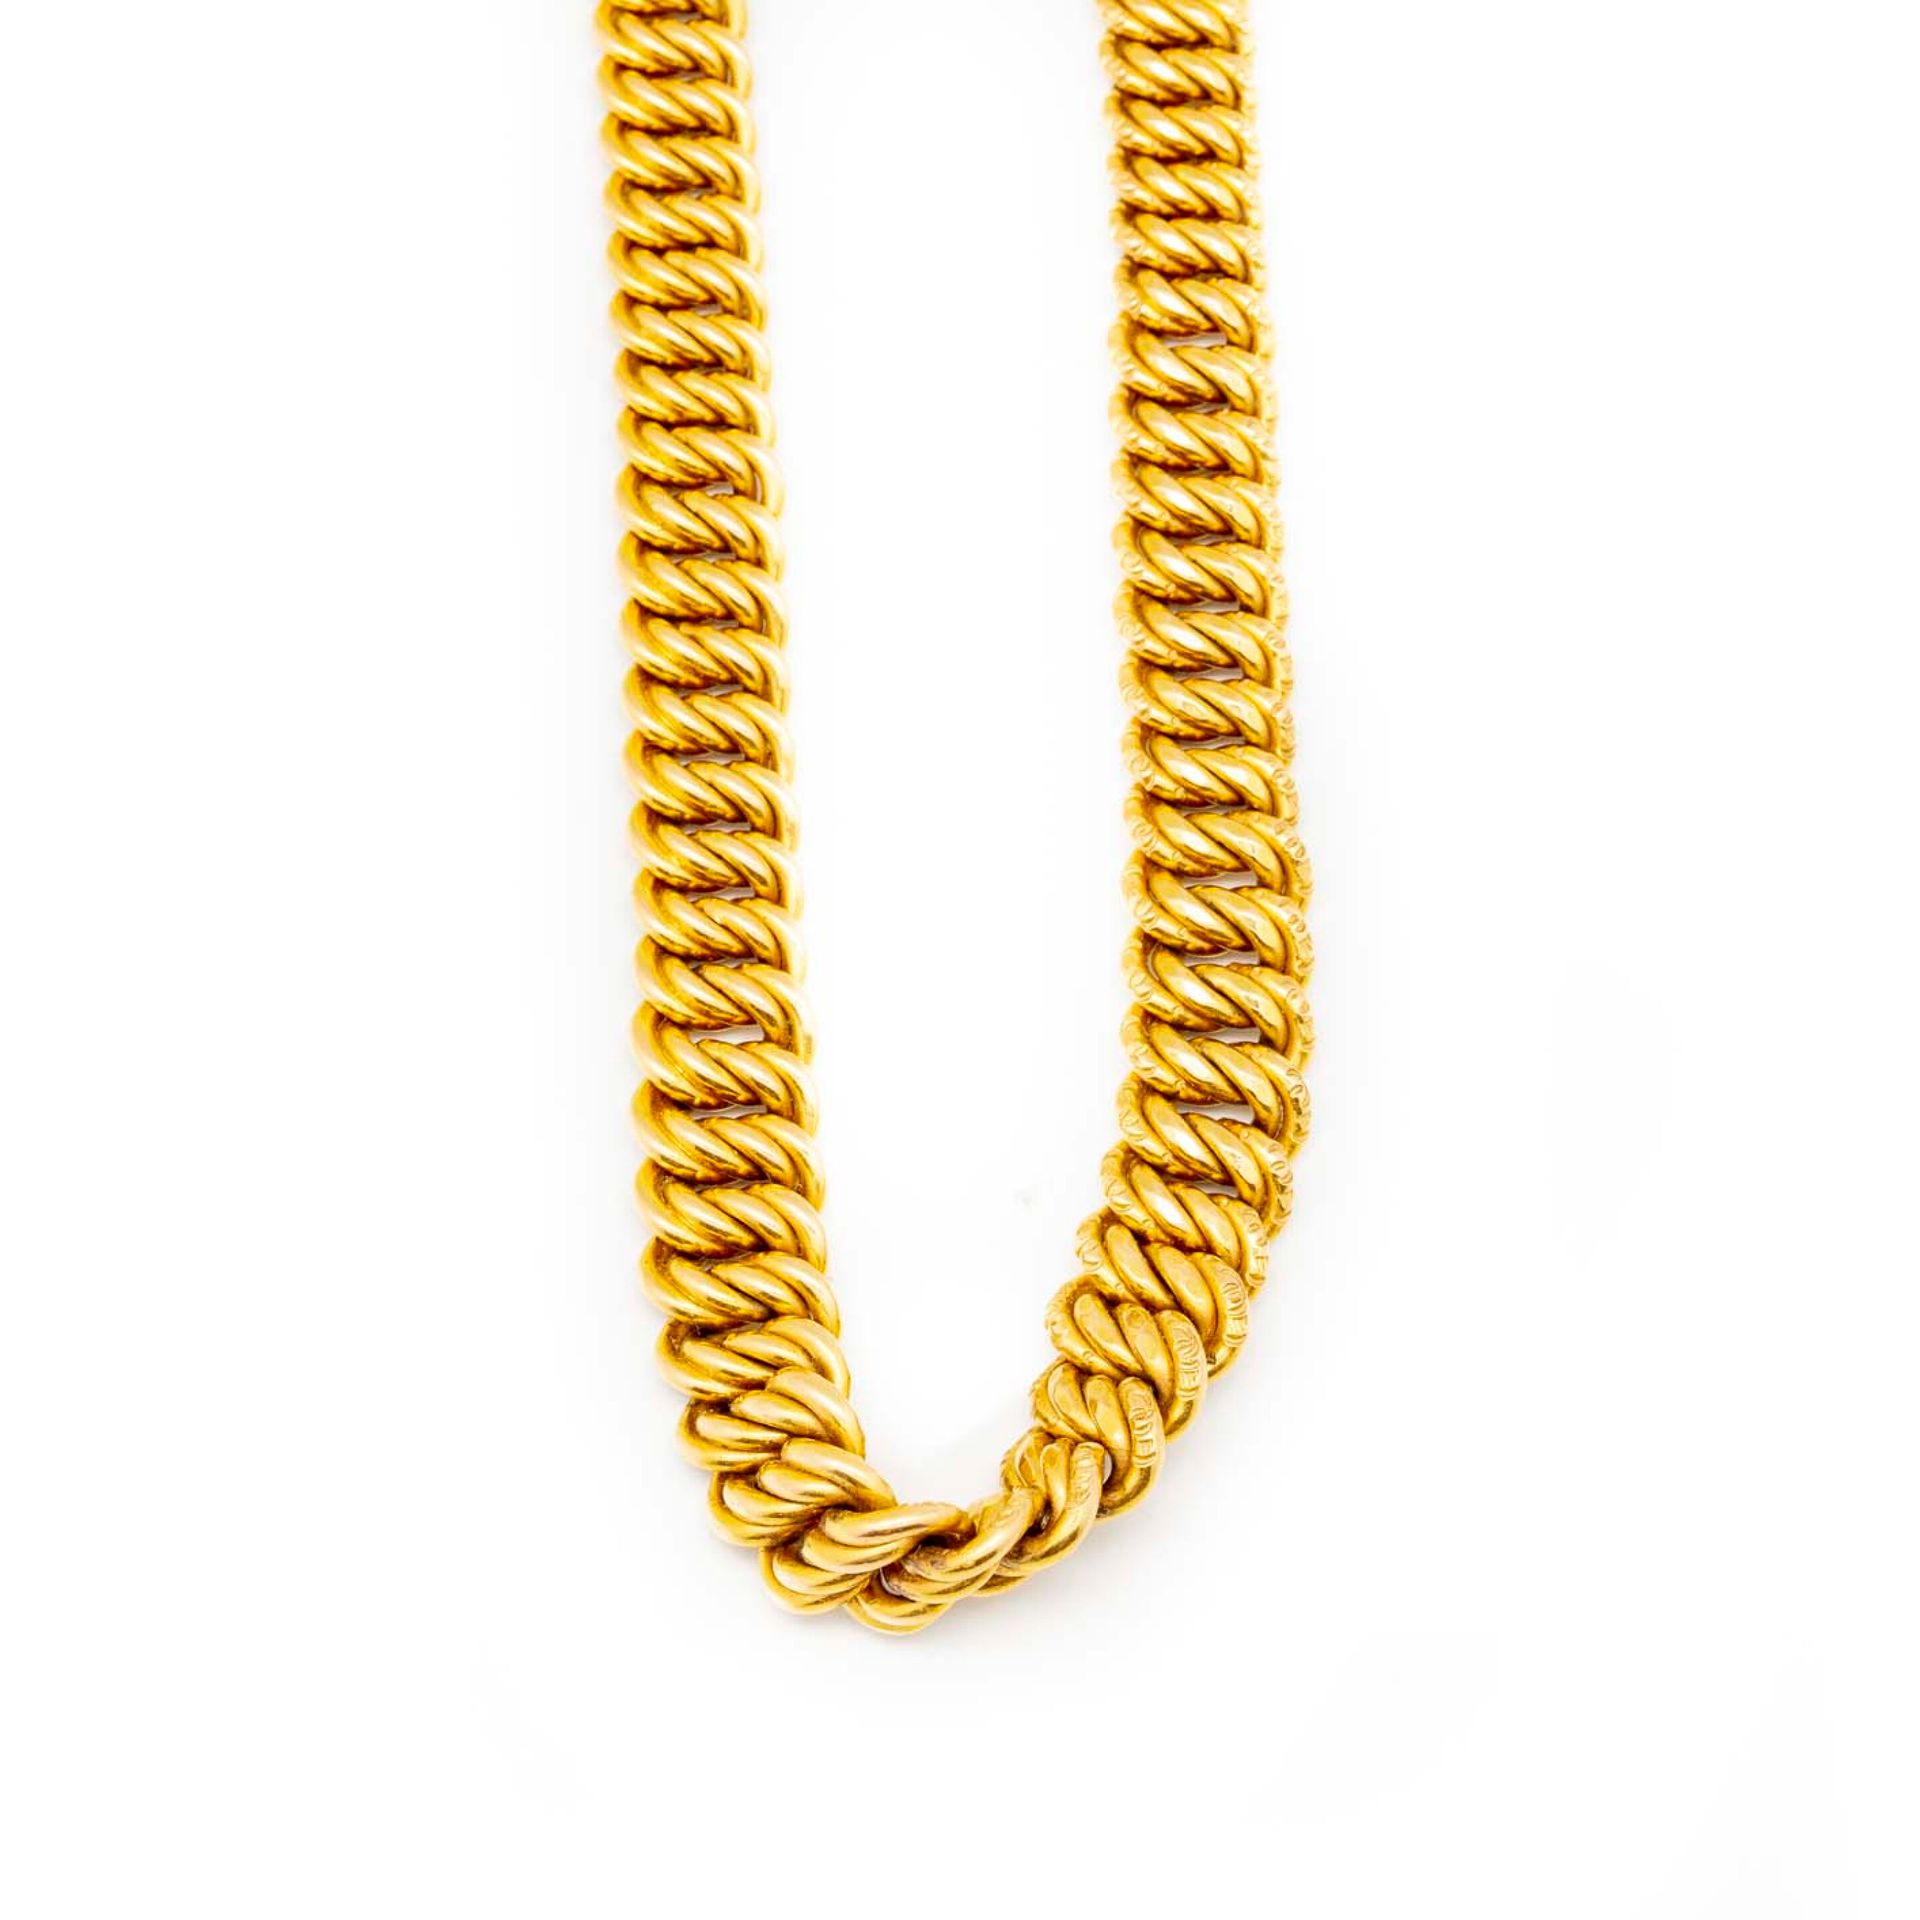 Null Collar de oro amarillo con eslabones articulados flexibles

Peso : 117 g.